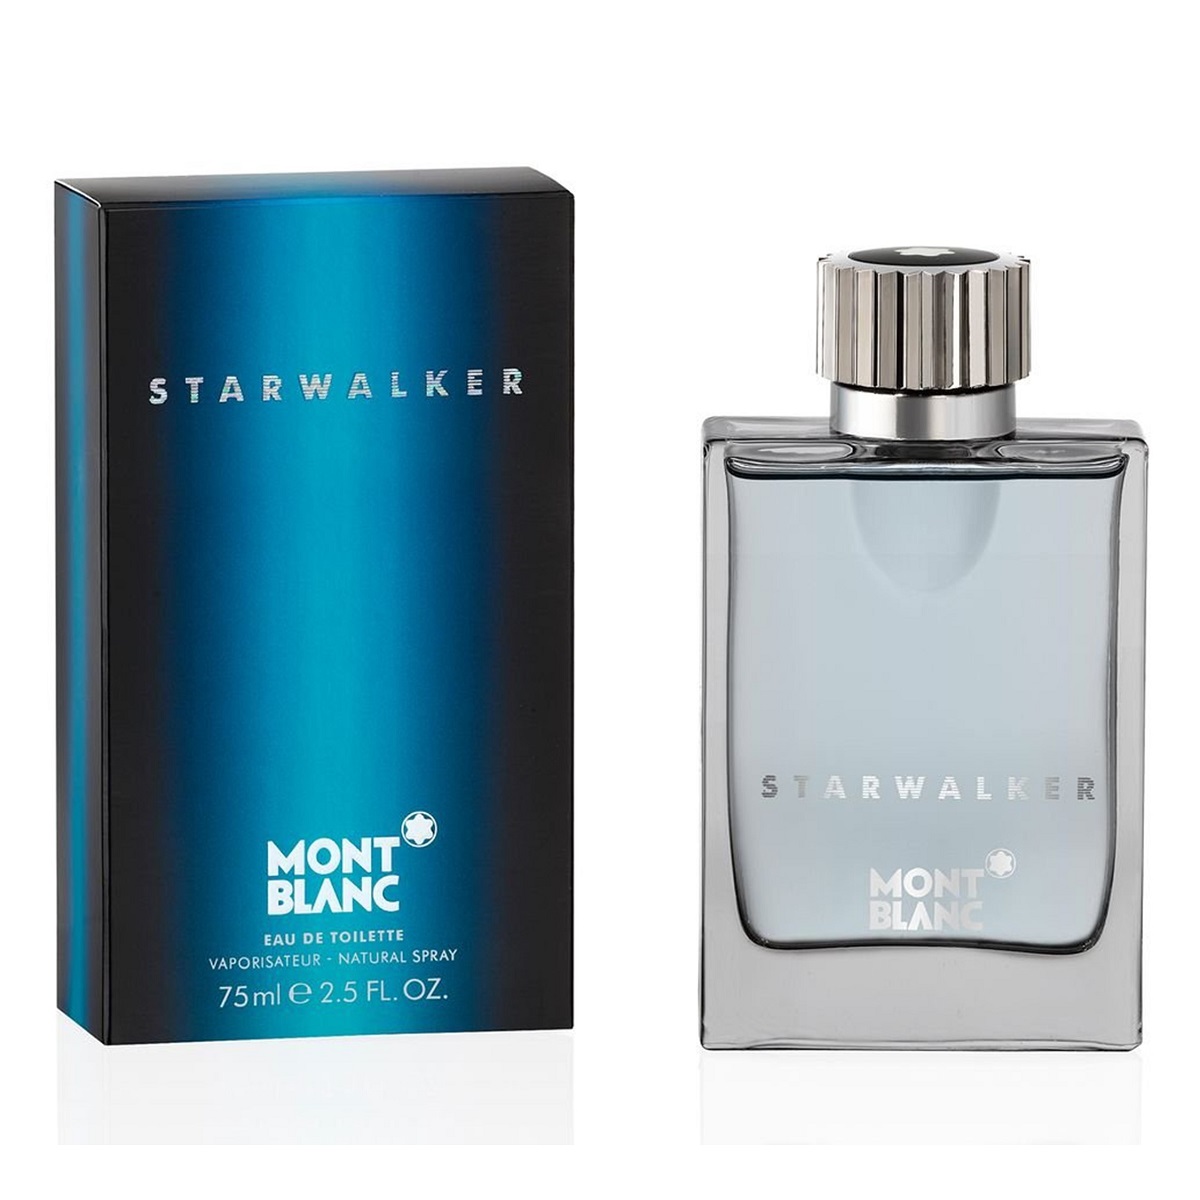 Starwalker Montblanc Eau de Toilette Perfume Masculino 75ml